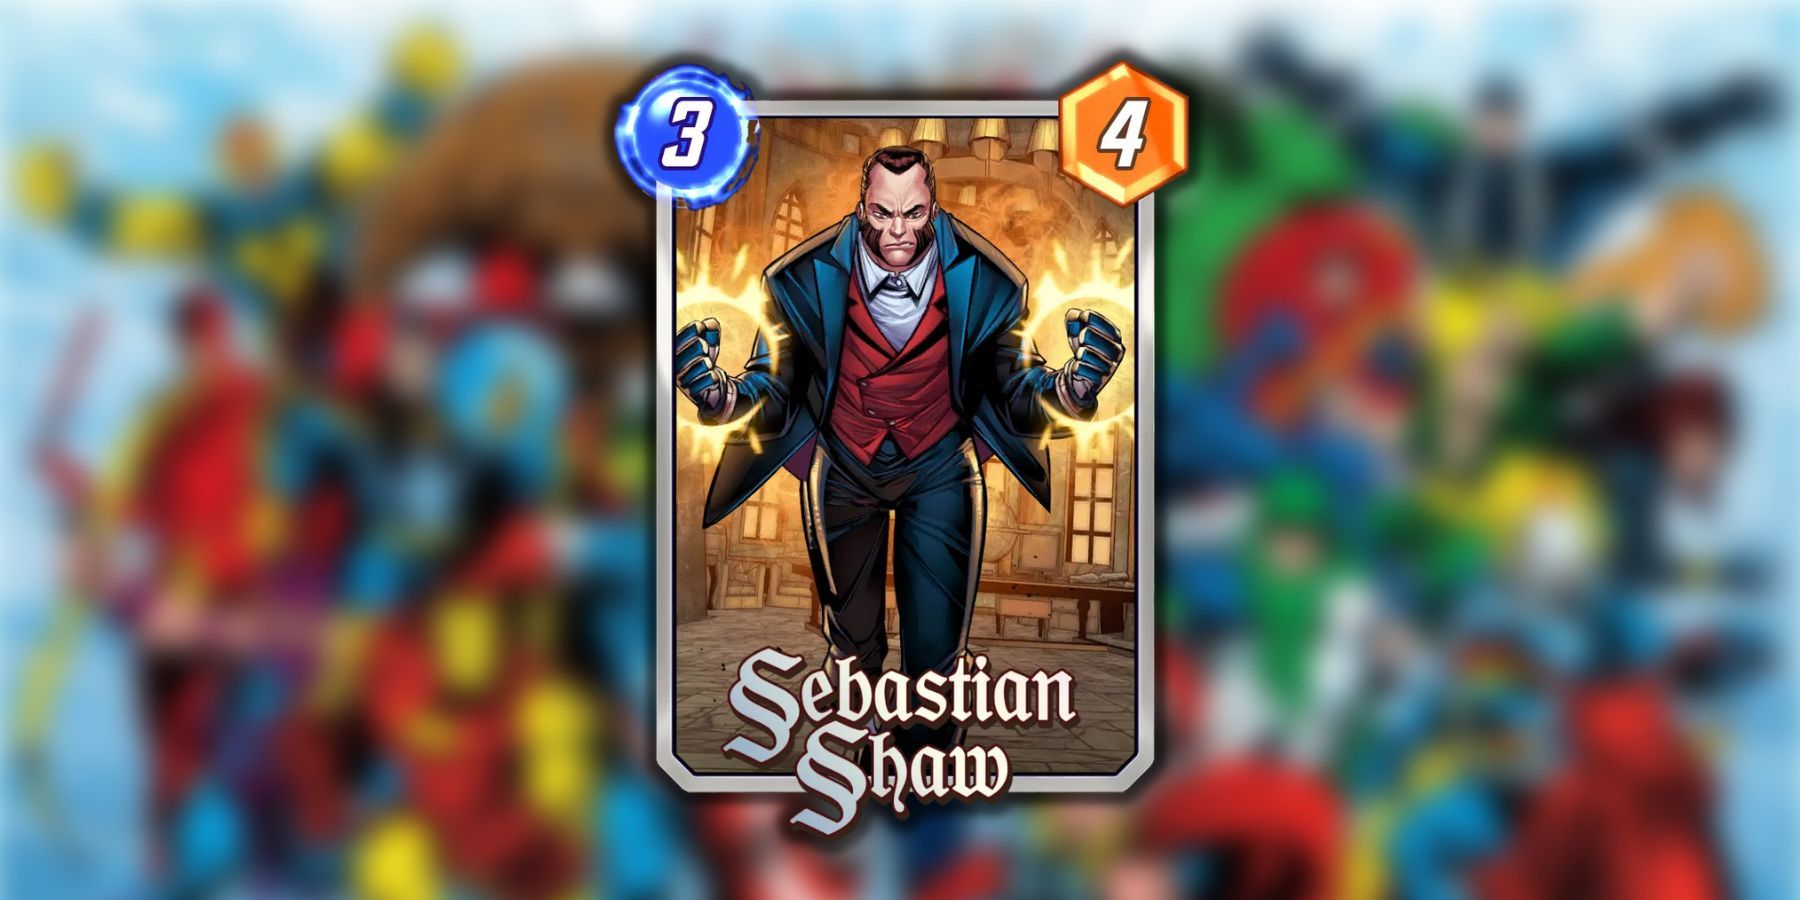 sebastian shaw card in marvel snap.